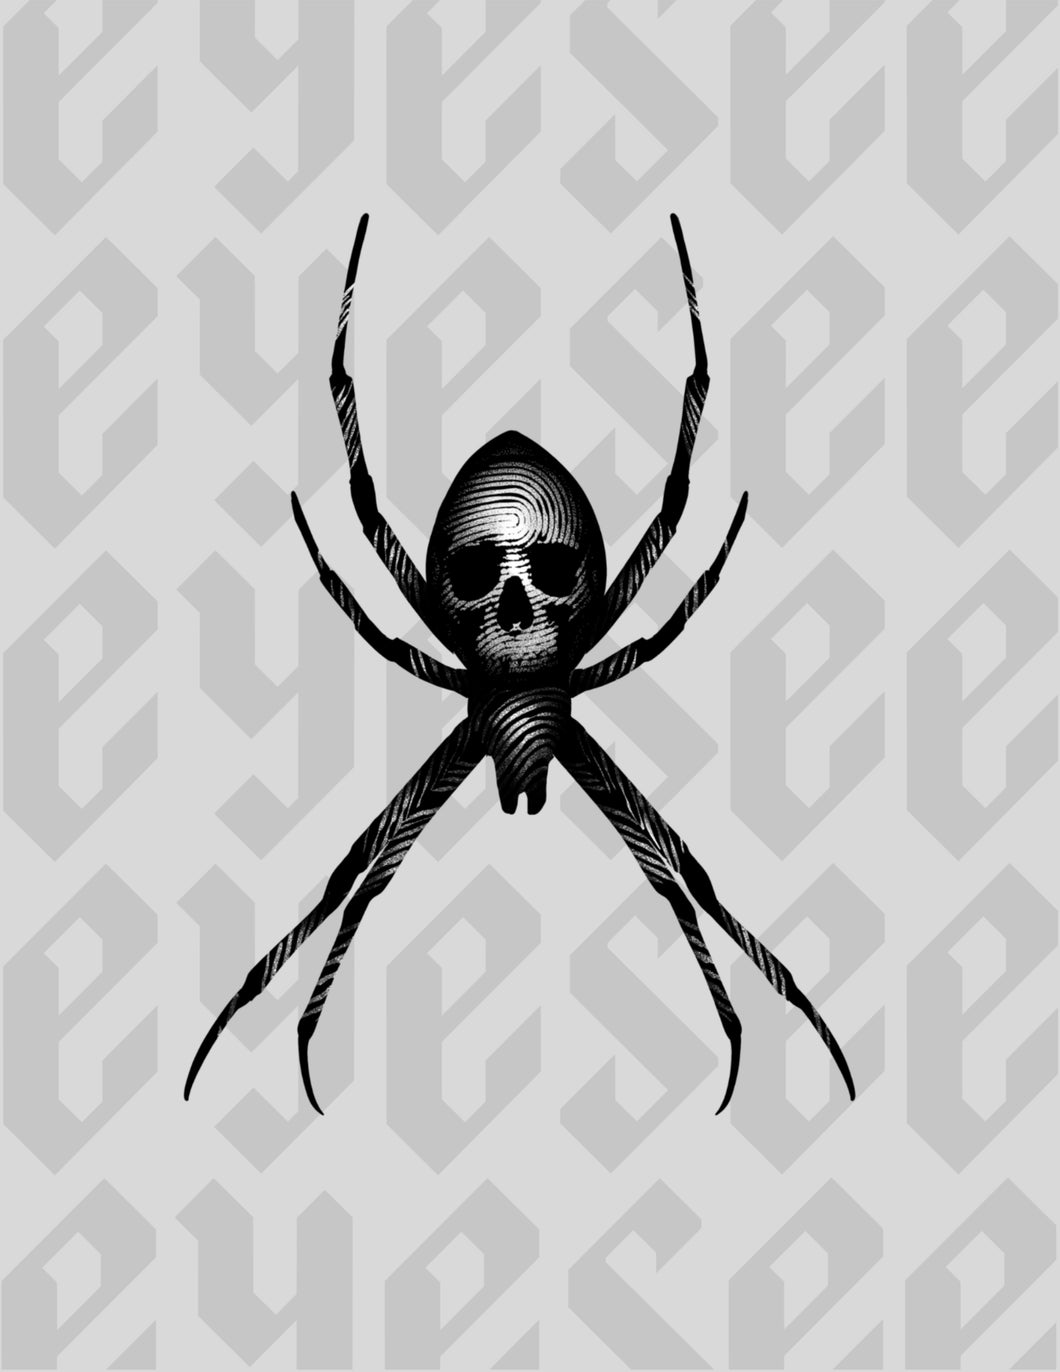 Spider Skull by Stephen